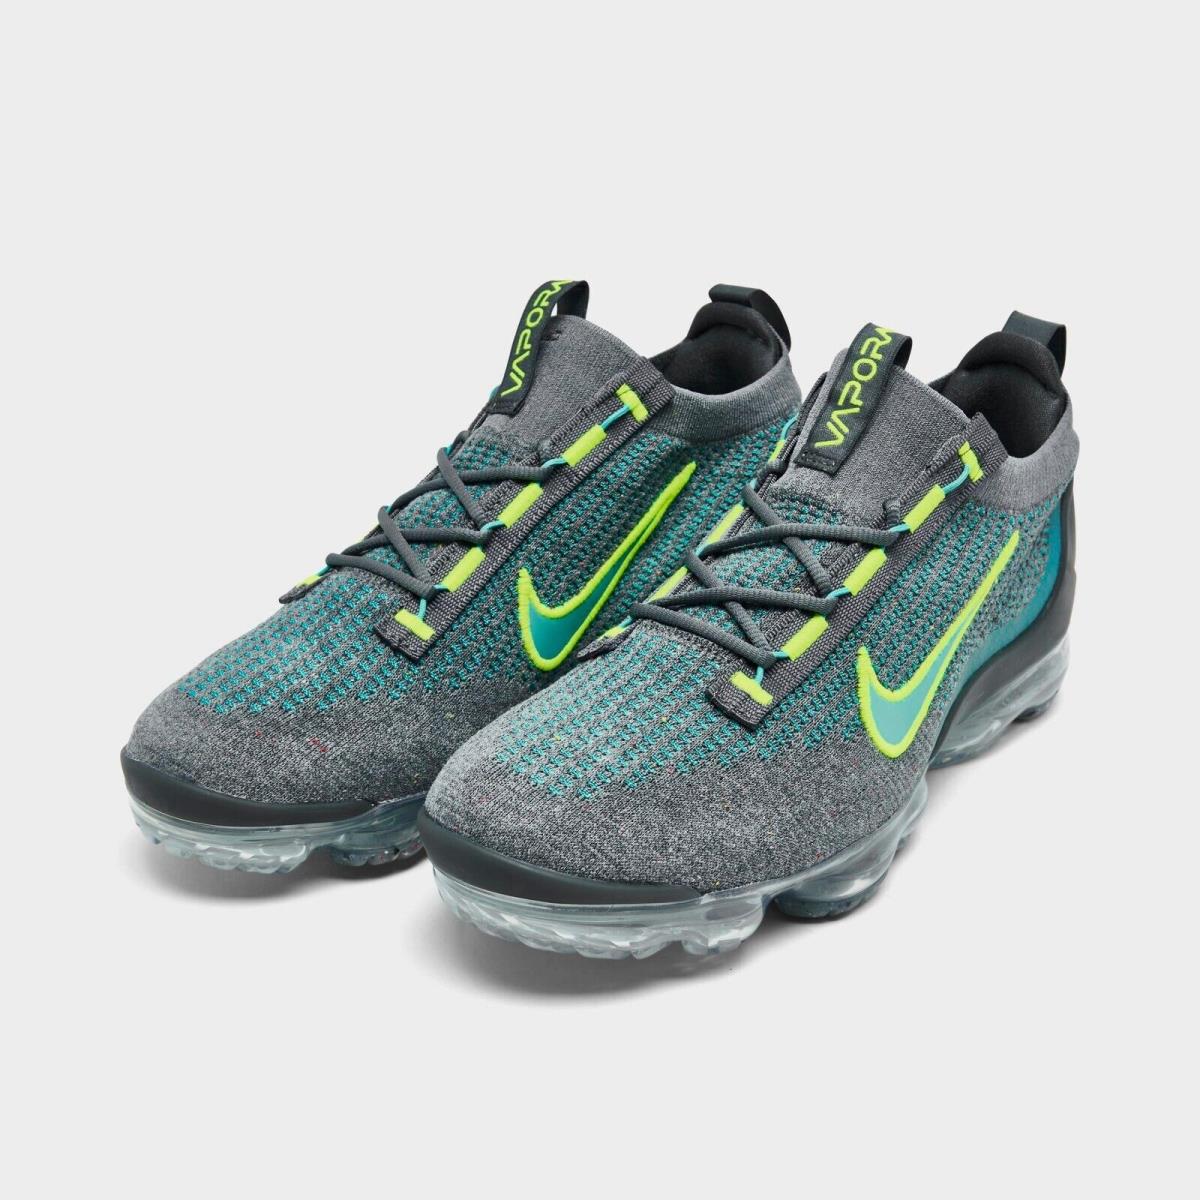 Nike Air Vapormax 2021 Flyknit Running Shoes Grey / Teal Sz 10 DM0025 001